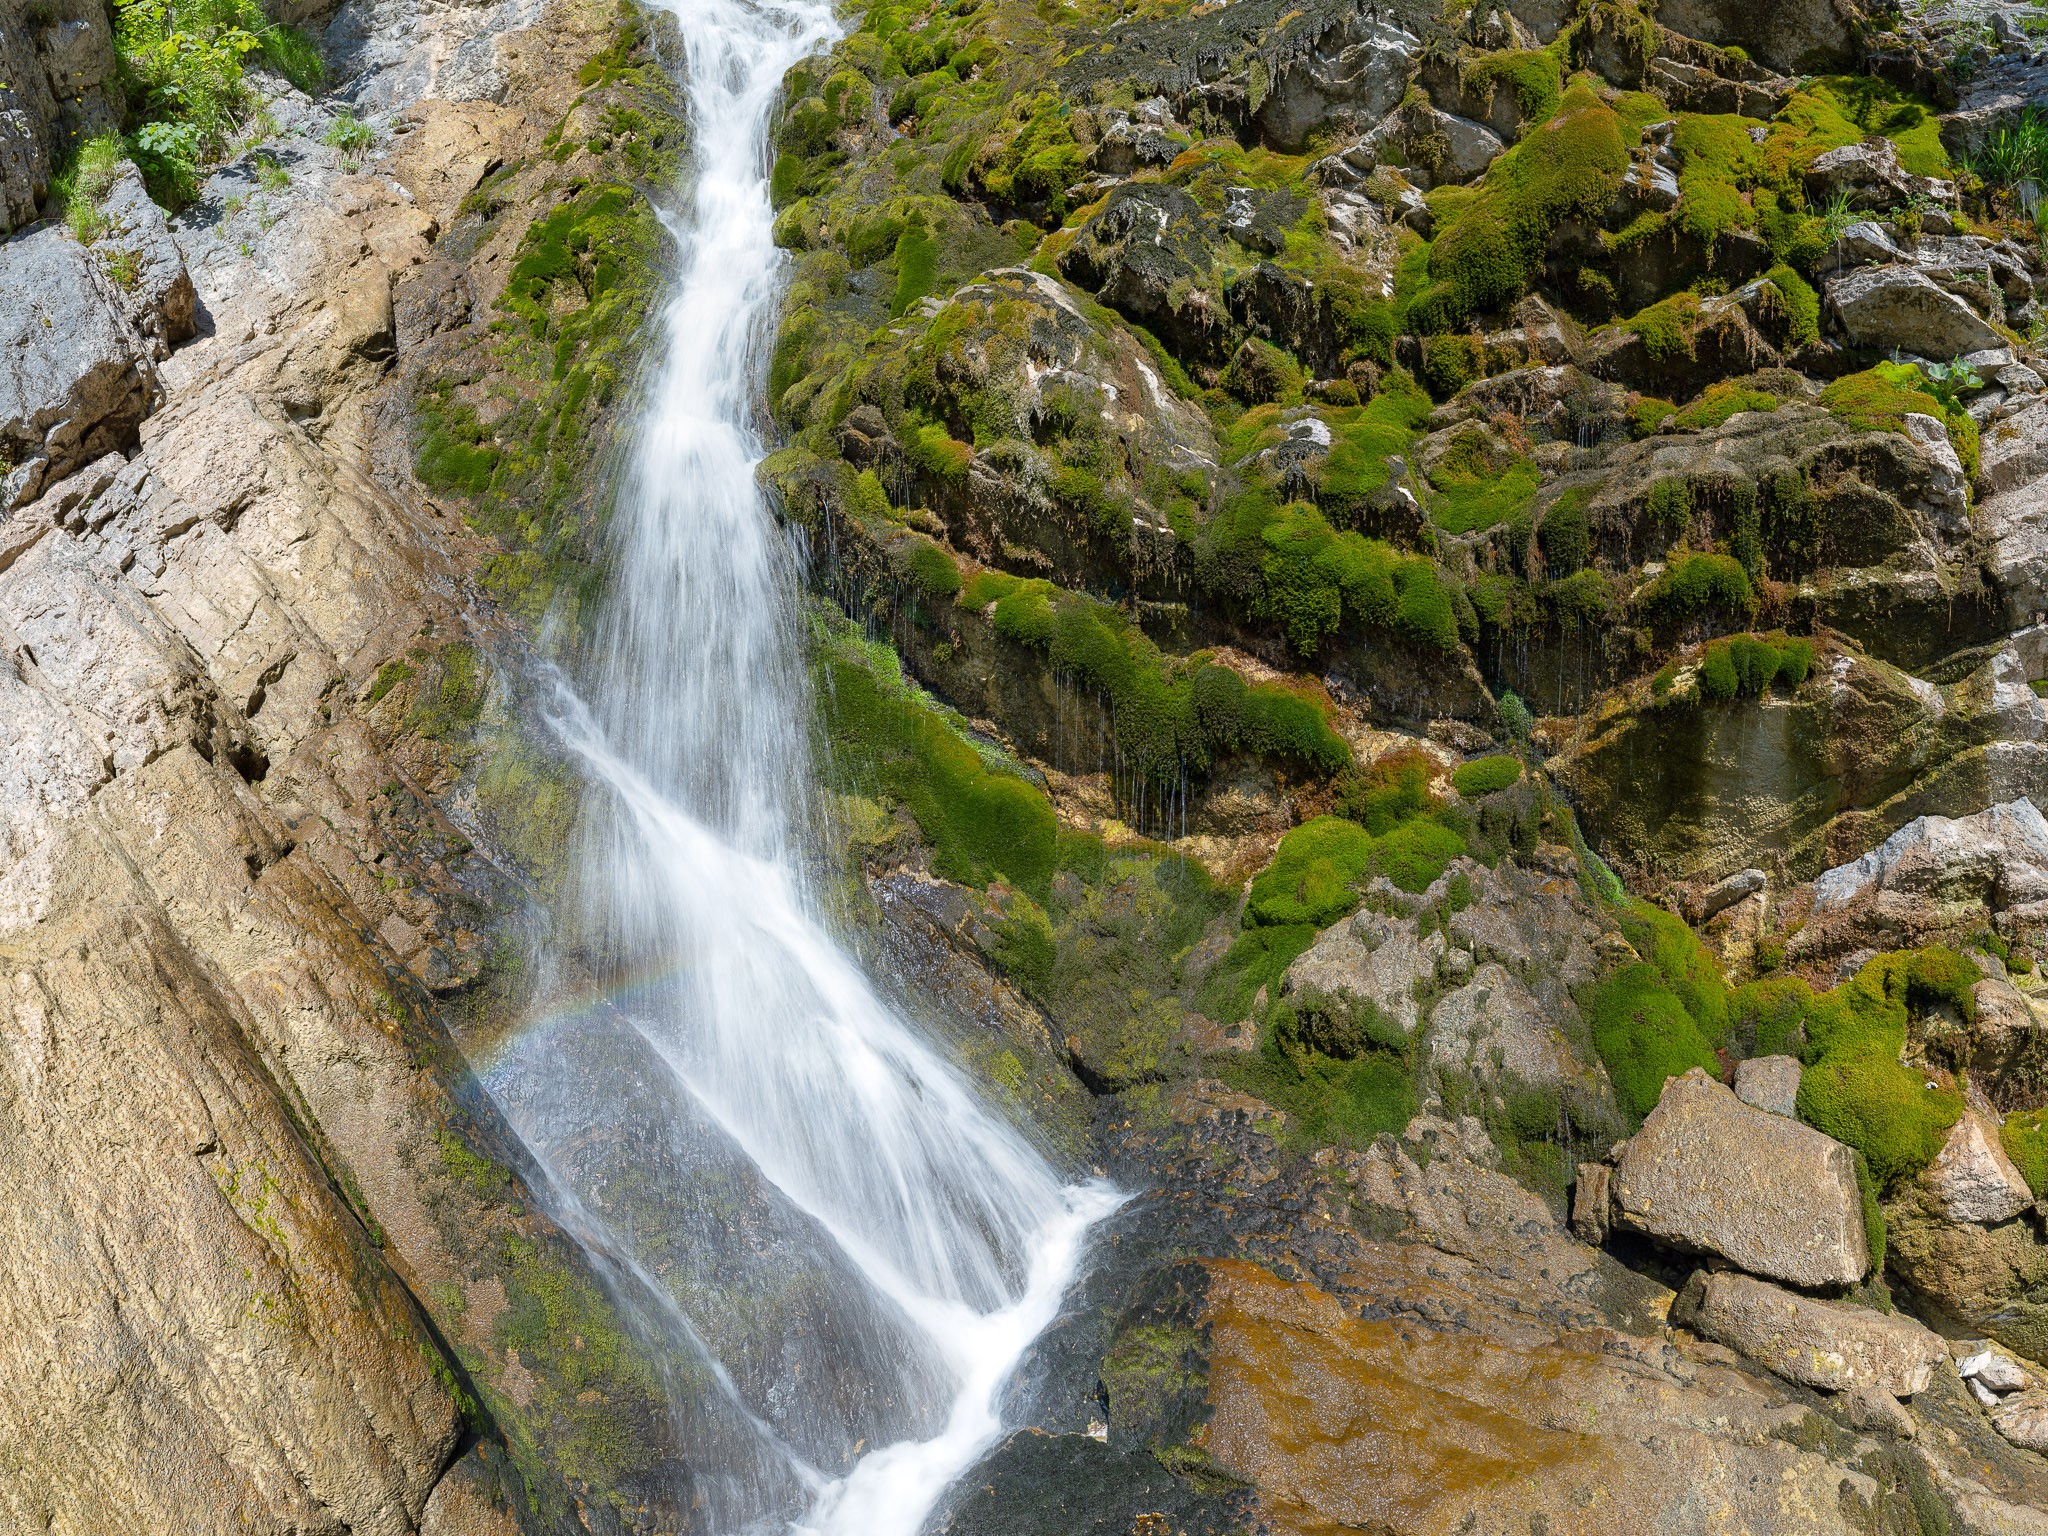 Wasserfall - Mooswand. Großer Wasserfall in Wallgau - Moos an den Felswänden.